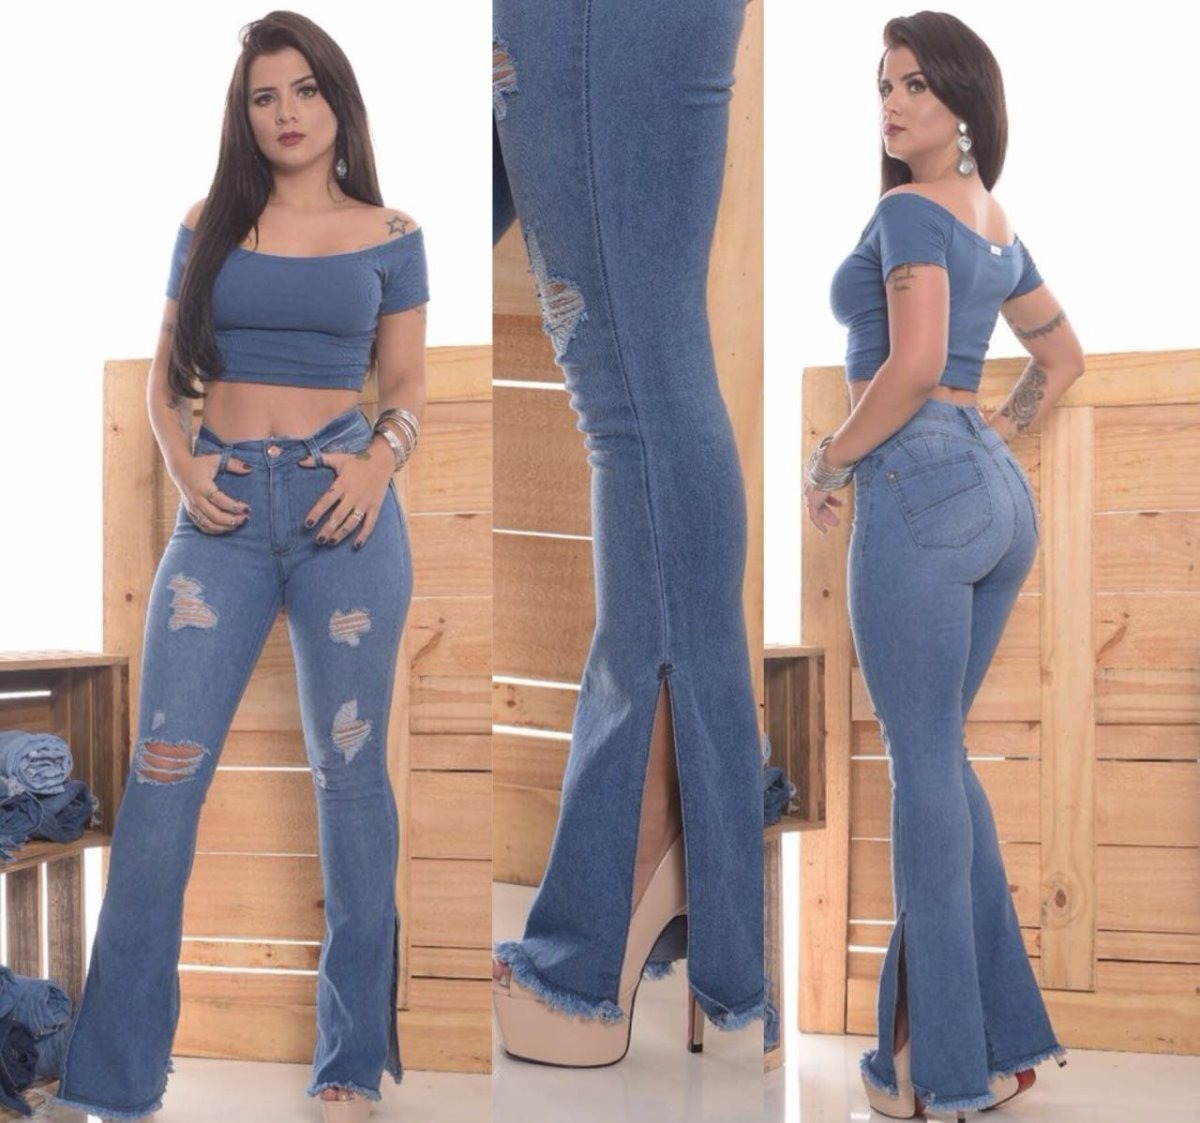 calça jeans 2019 feminina